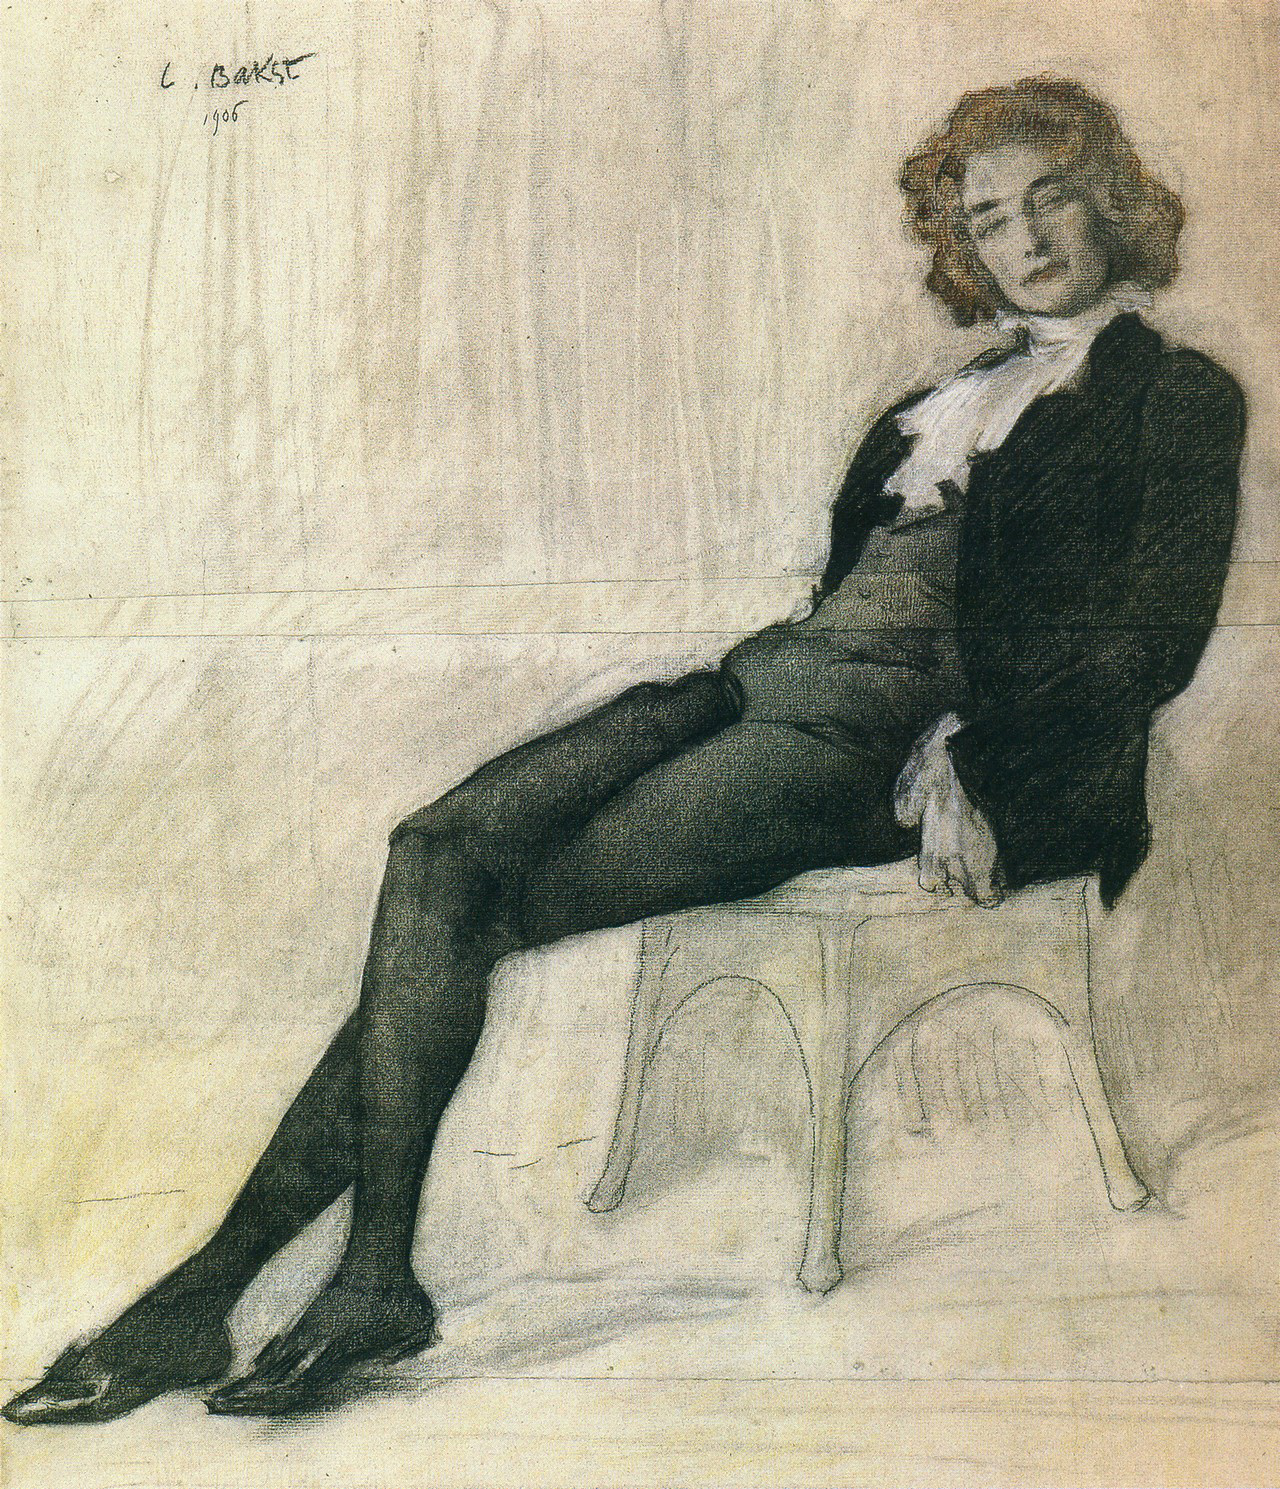 Retrato de Guíppius por Leon Bakst, 1906